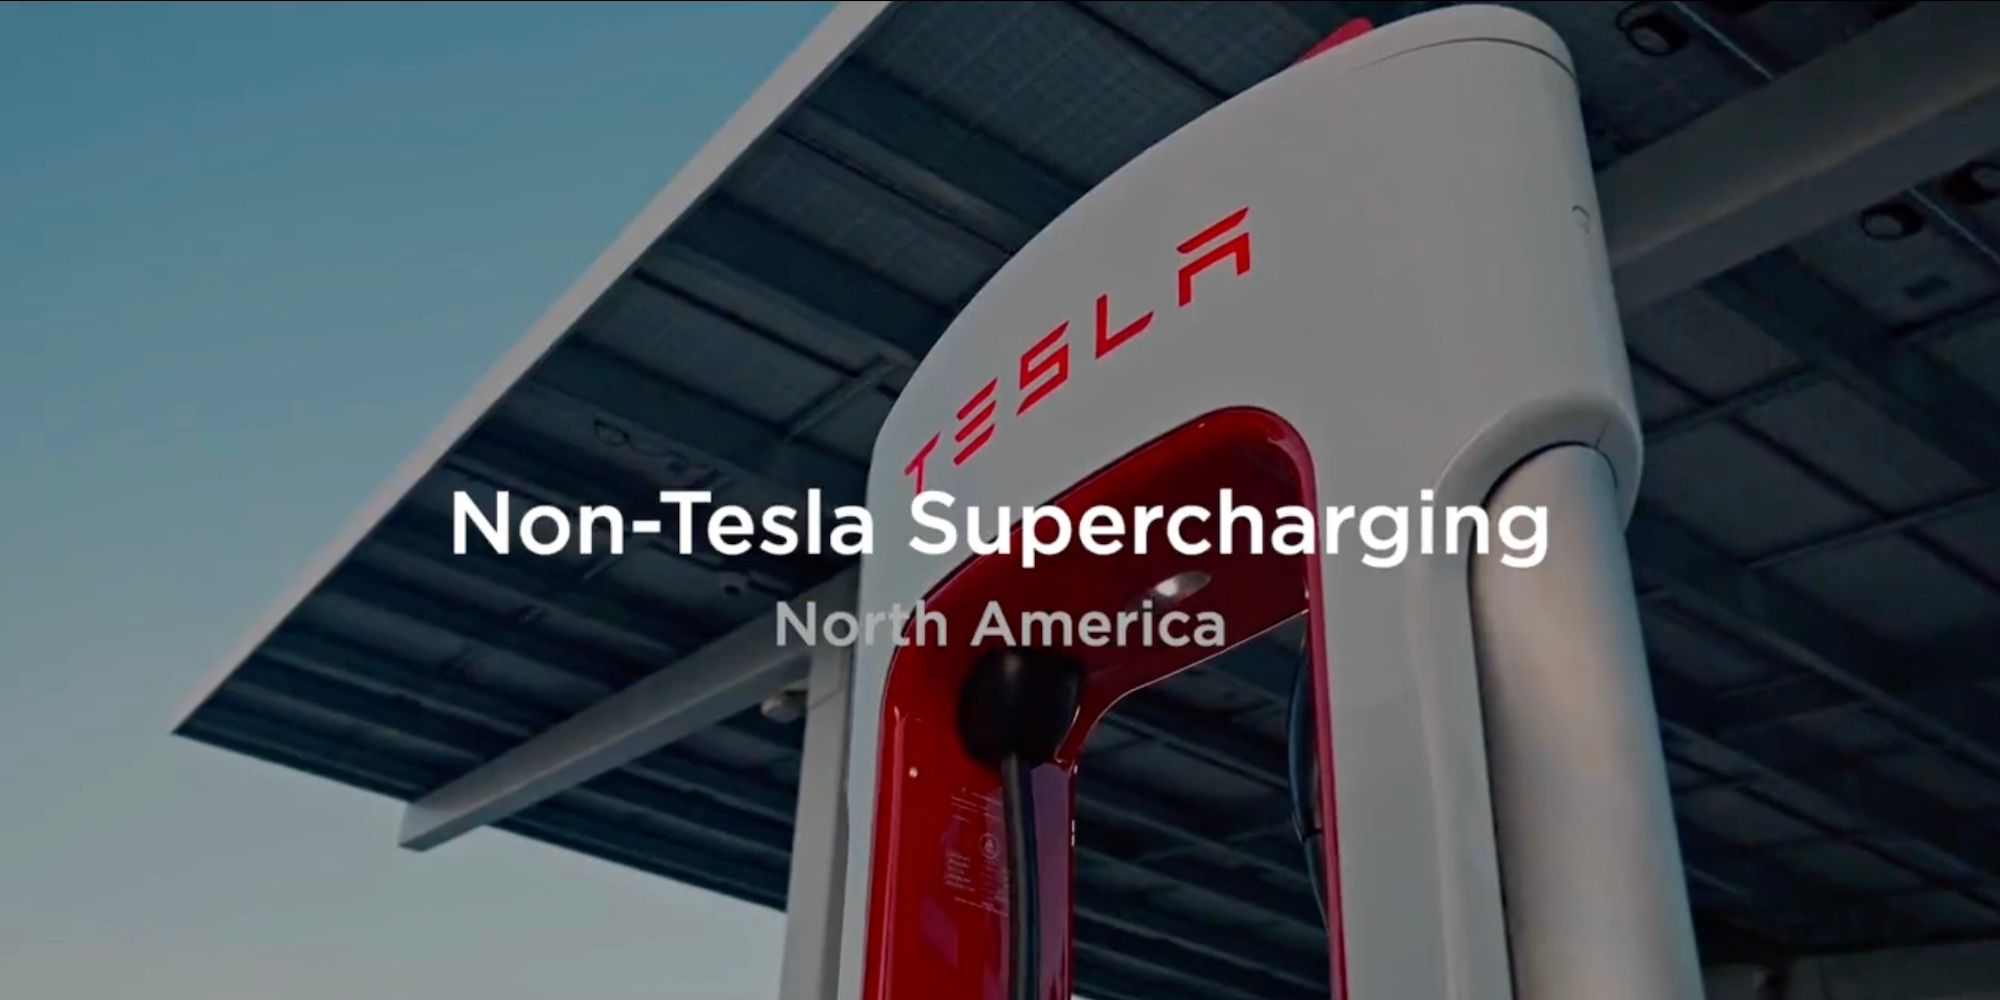 Non Tesla Supercharging opens in North America